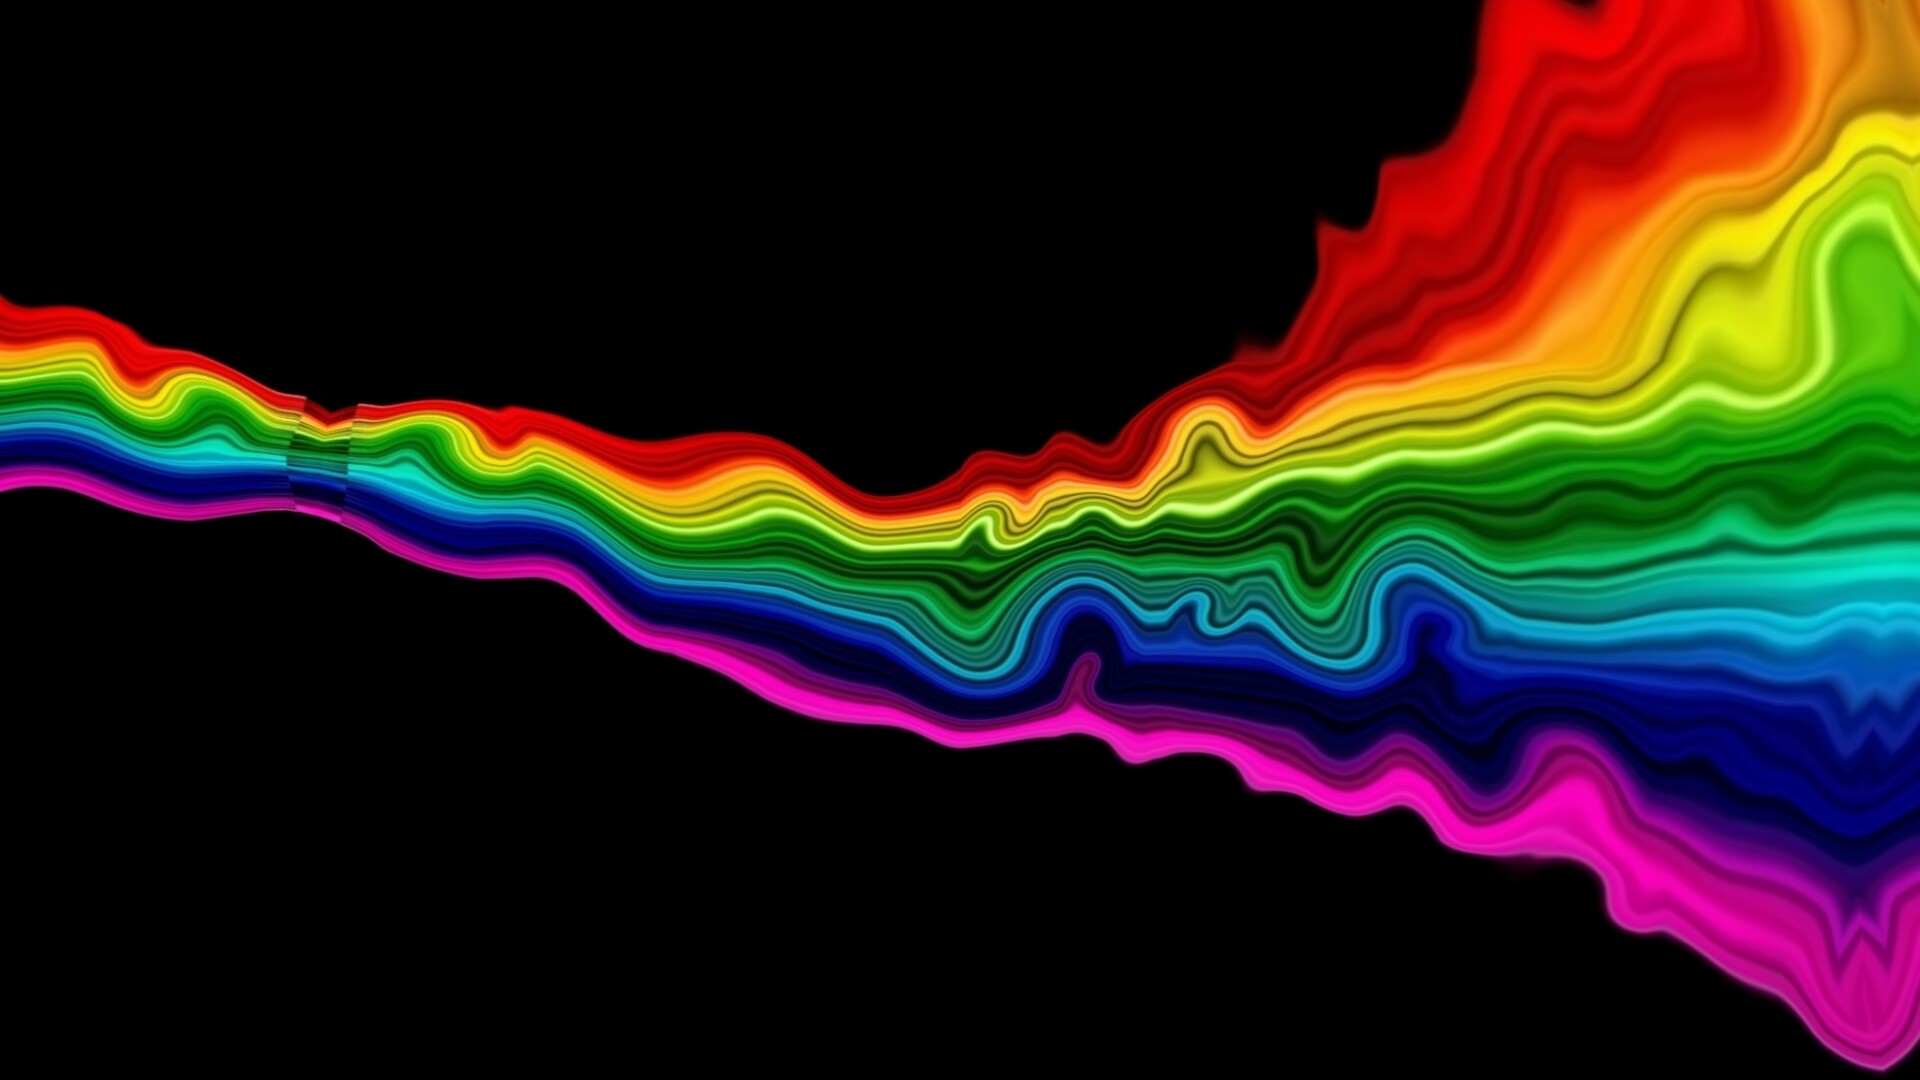 Rainbow Colors: Abstract digital illustration, Art movement. 1920x1080 Full HD Background.